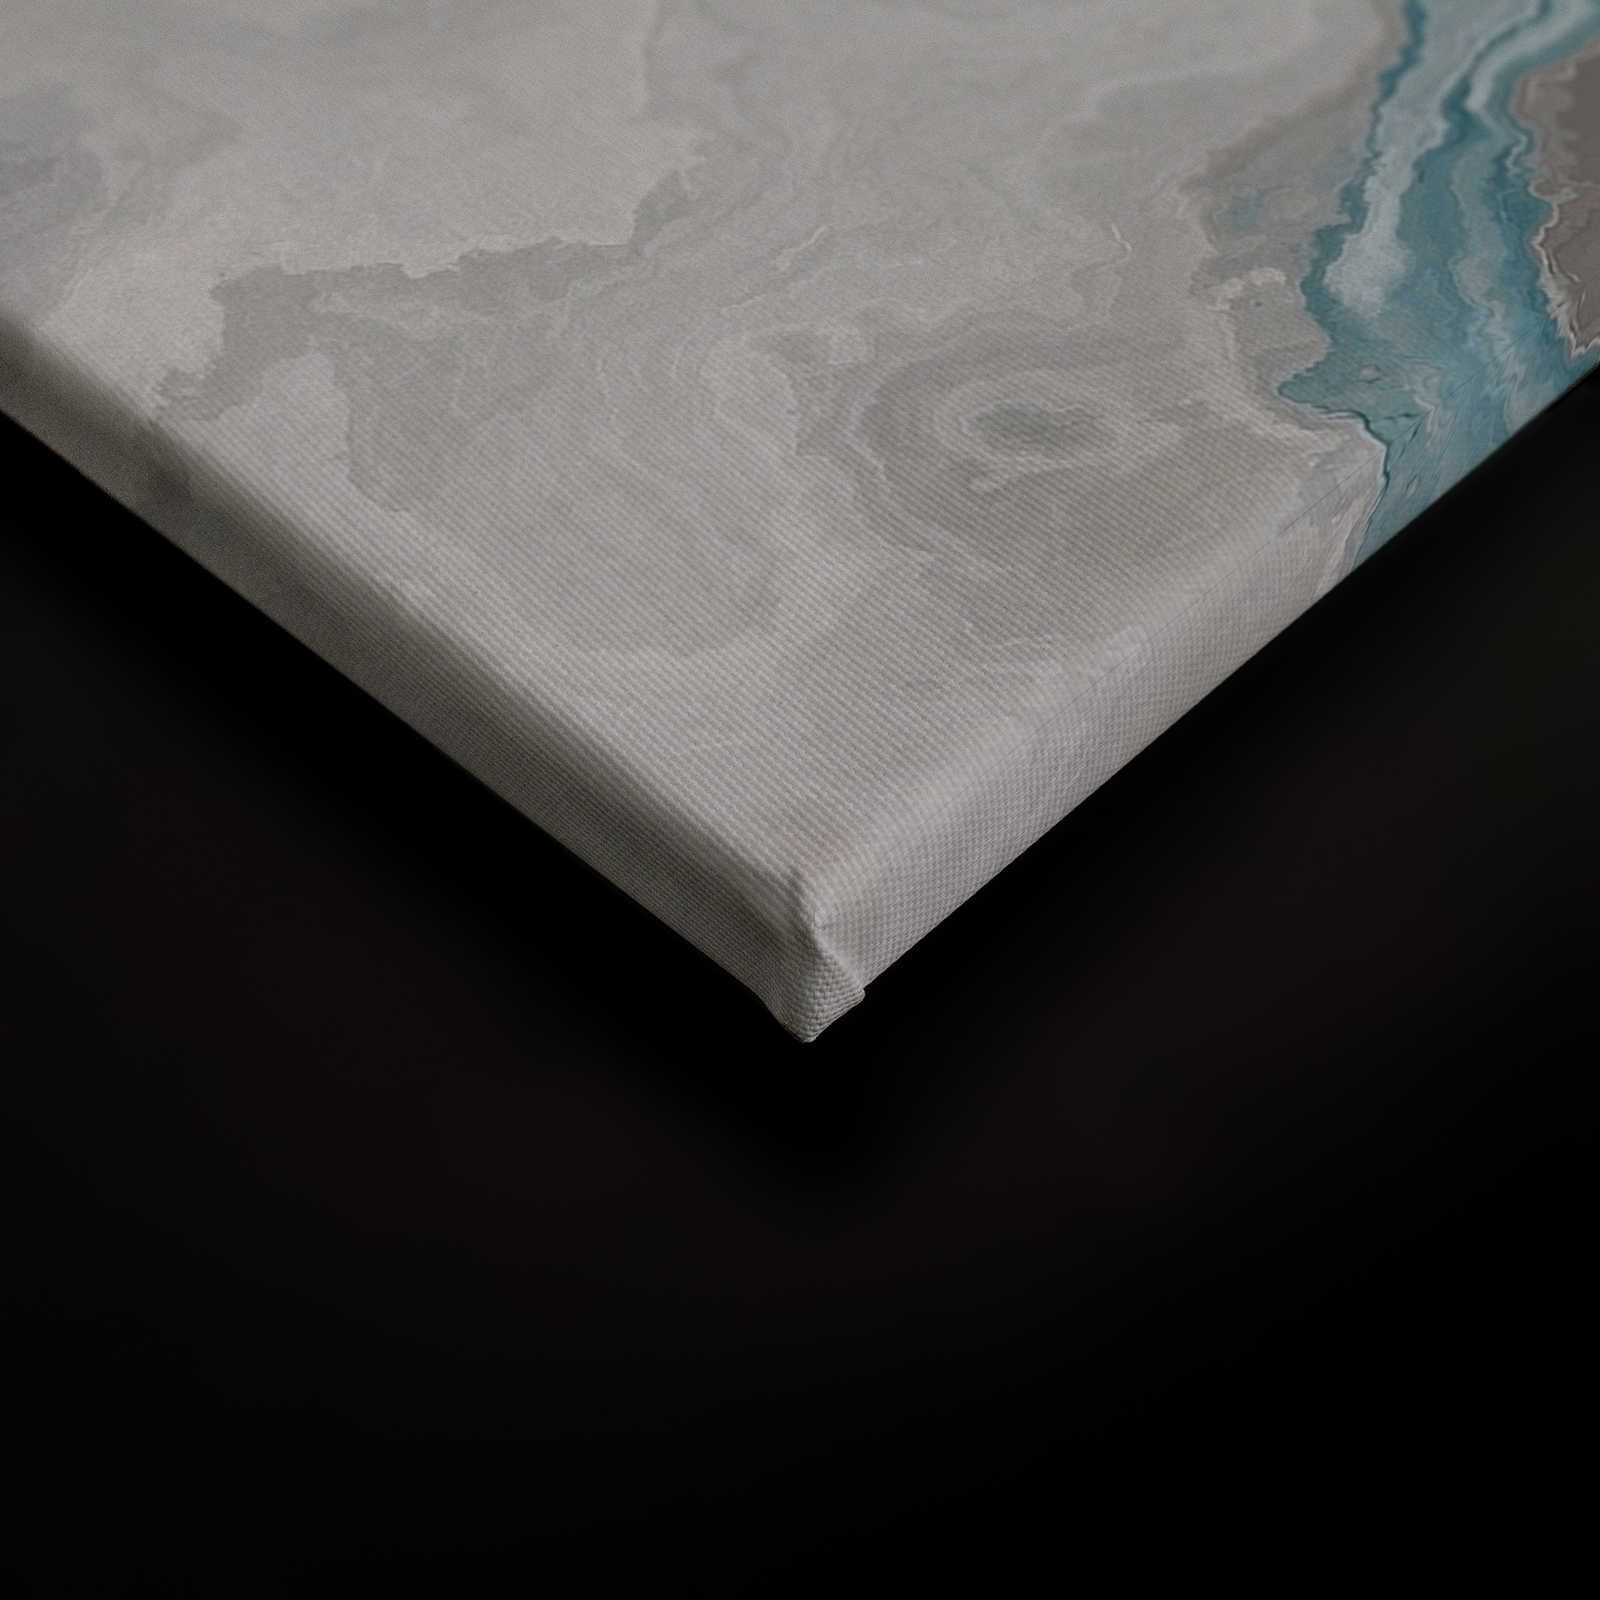             Leinwandbild marmoriert mit Quarz-Optik – 0,90 m x 0,60 m
        